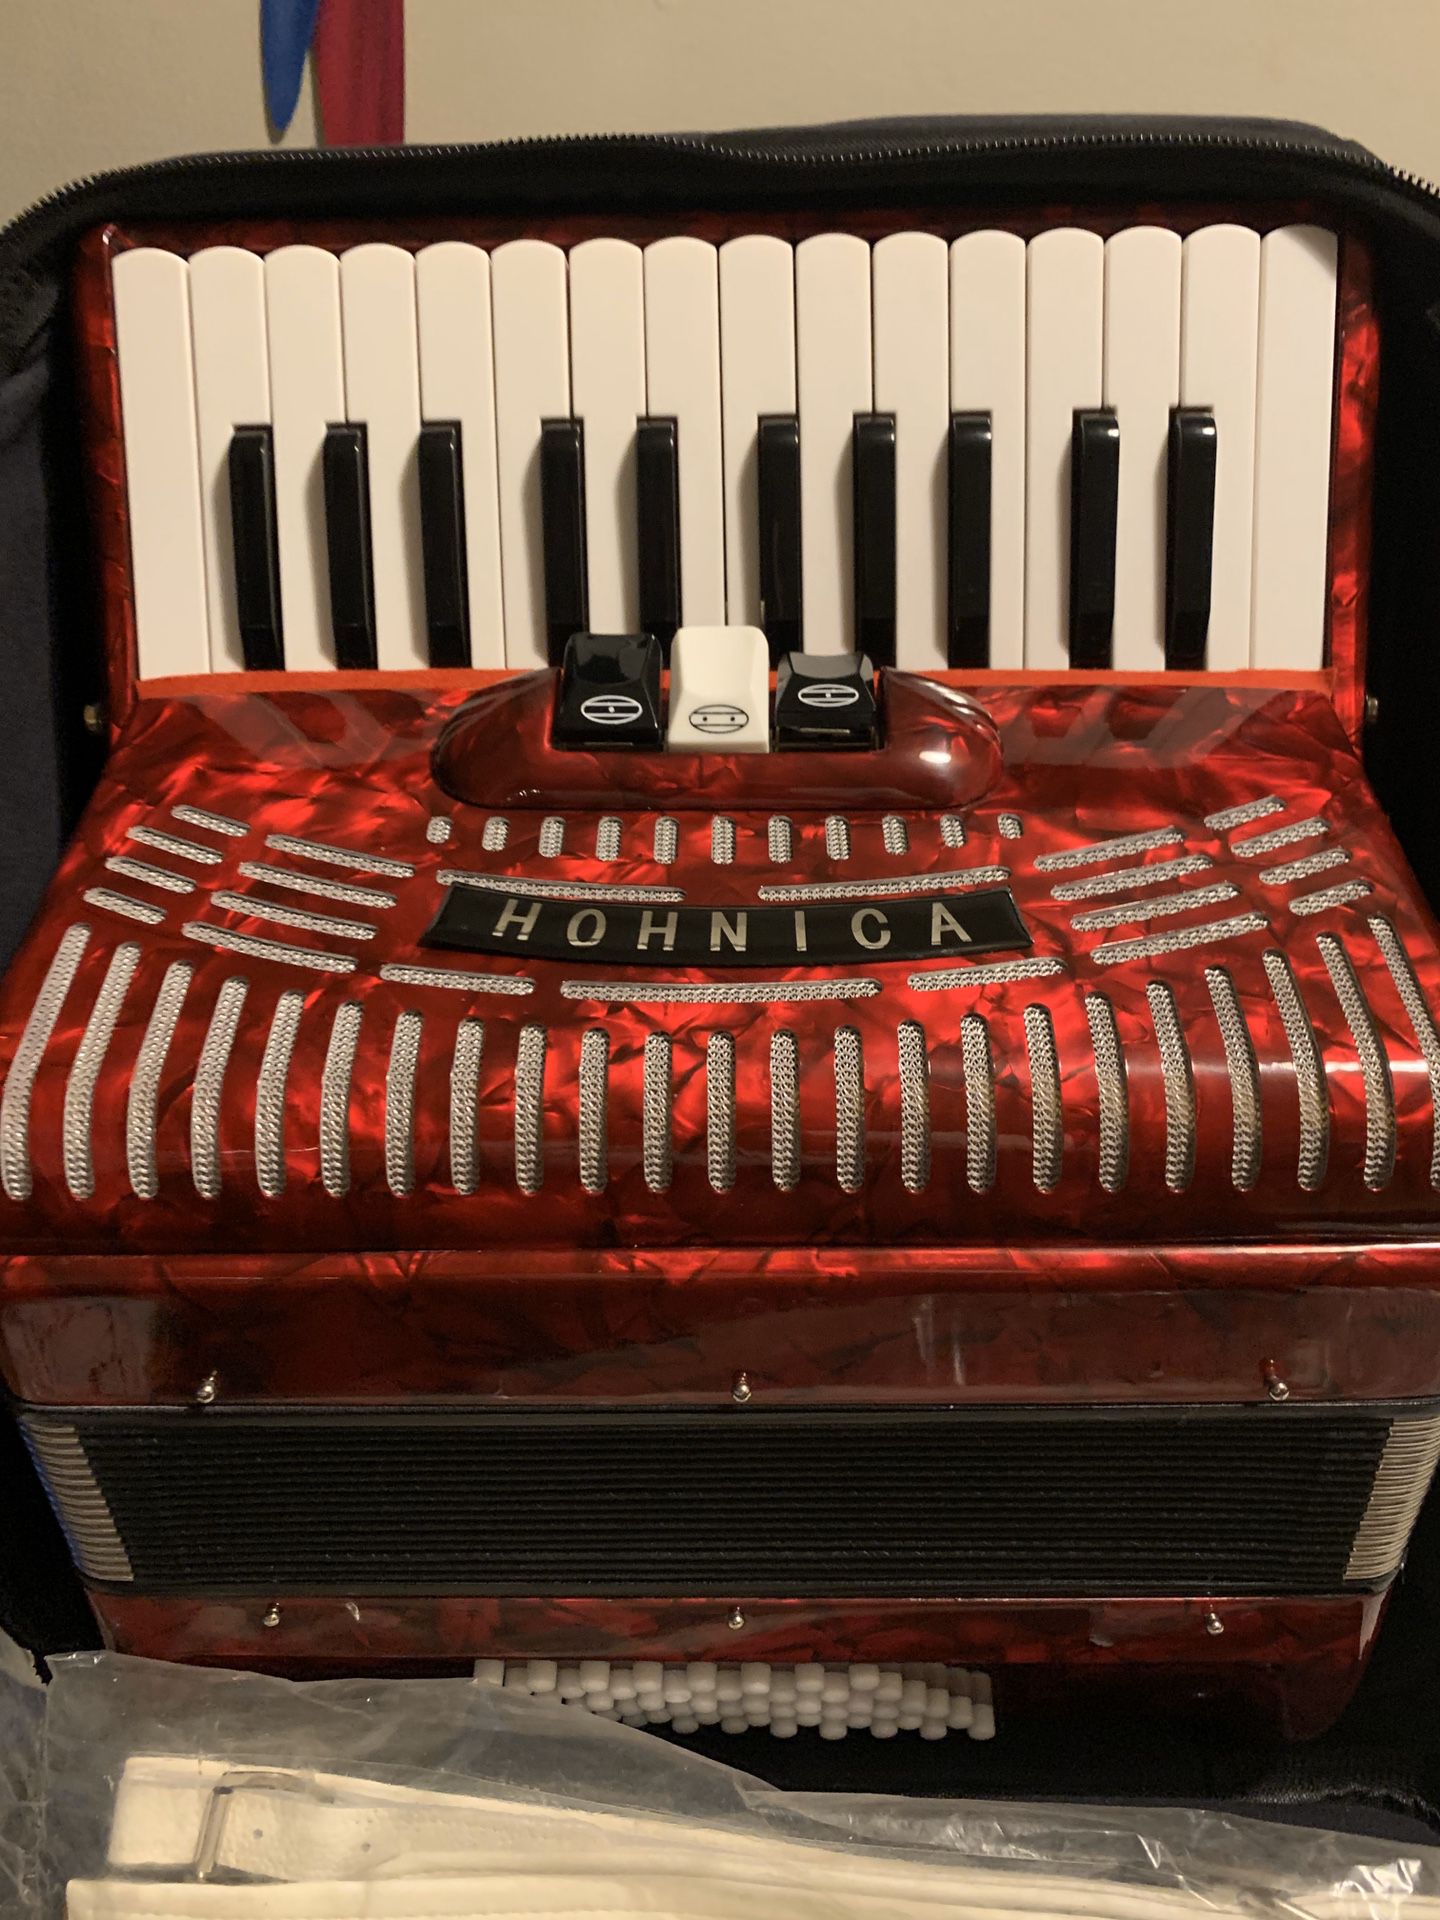 Hohner hohnica piano accordion acordeon